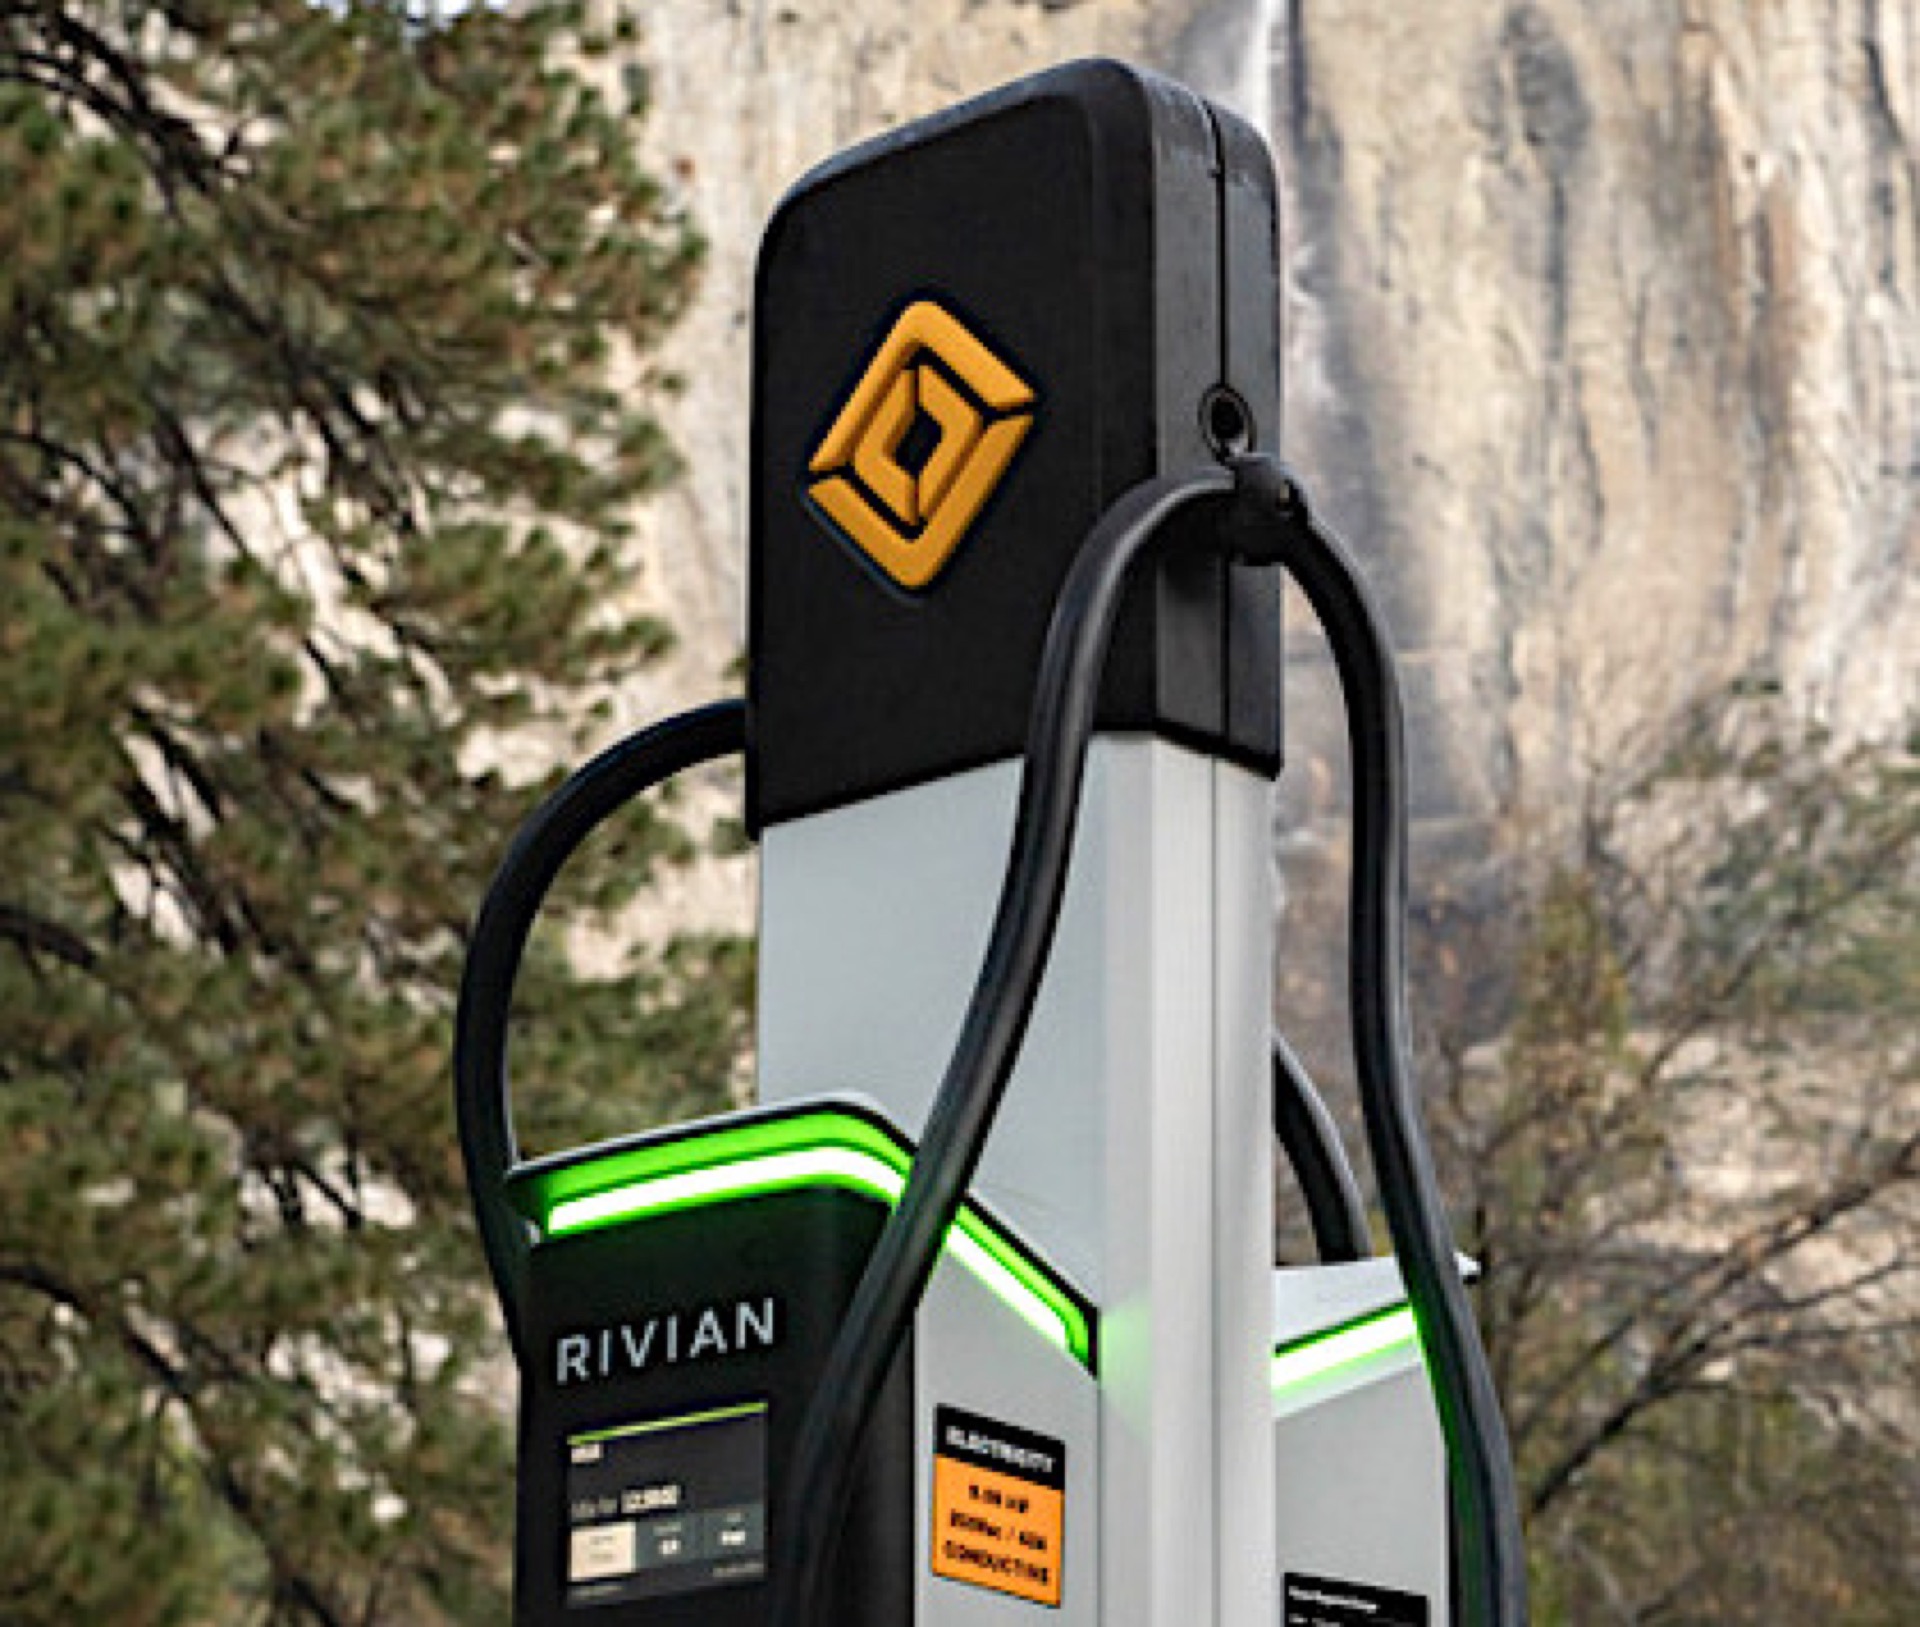 Rivian sponsors destination chargers overseen by nonprofit at Yosemite, Golden GateRivian sponsors destination chargers overseen by nonprofit at Yosemite, Golden Gate